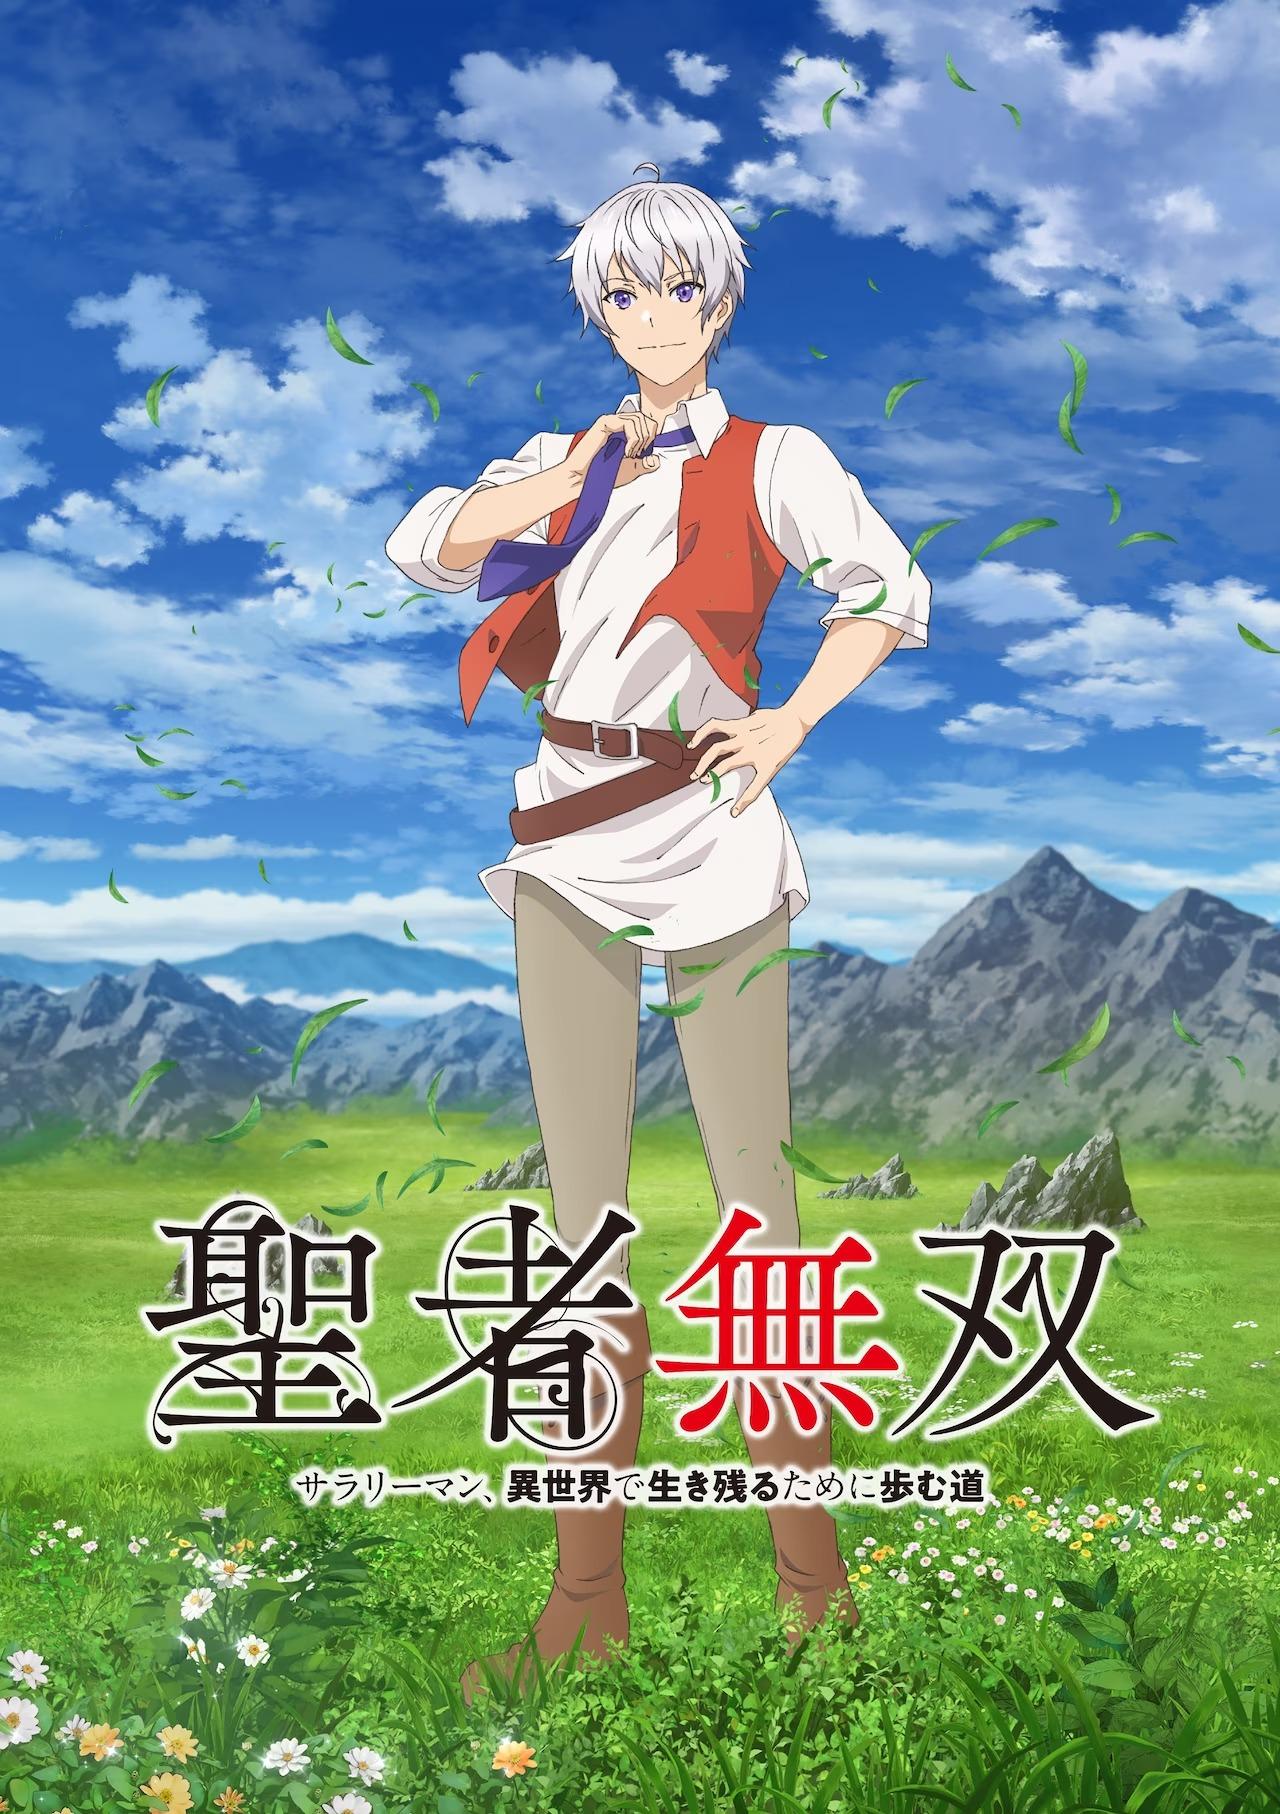 El anime Tensai Ouji no Akaji Kokka Saisei Jutsu anunció su fecha de estreno